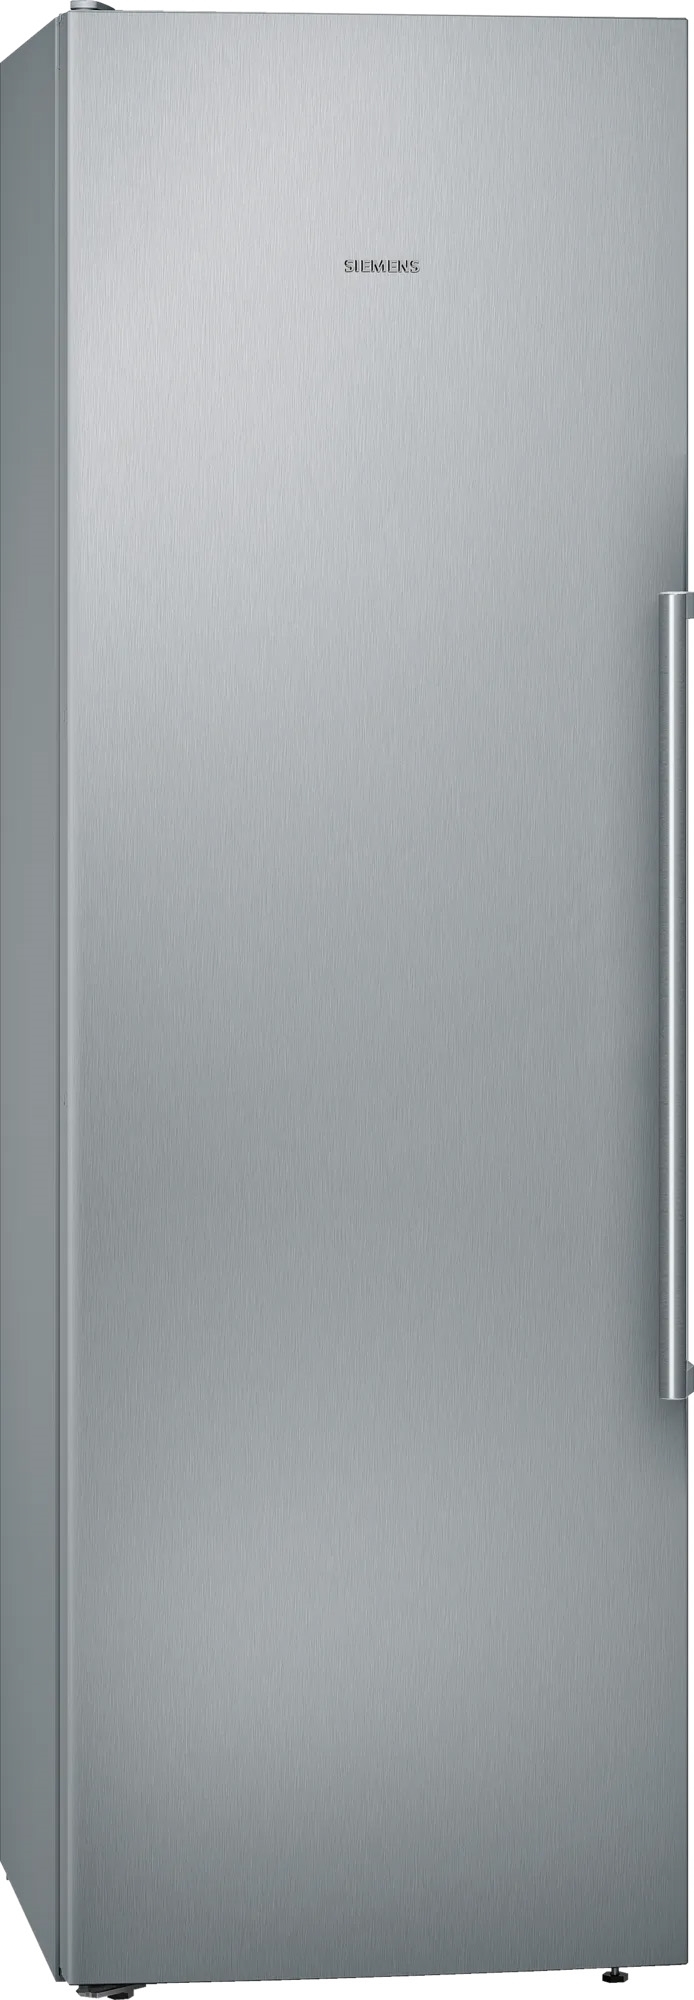 Køleskab 186 x 60 cm - Siemens iQ700 - KS36FPIDP